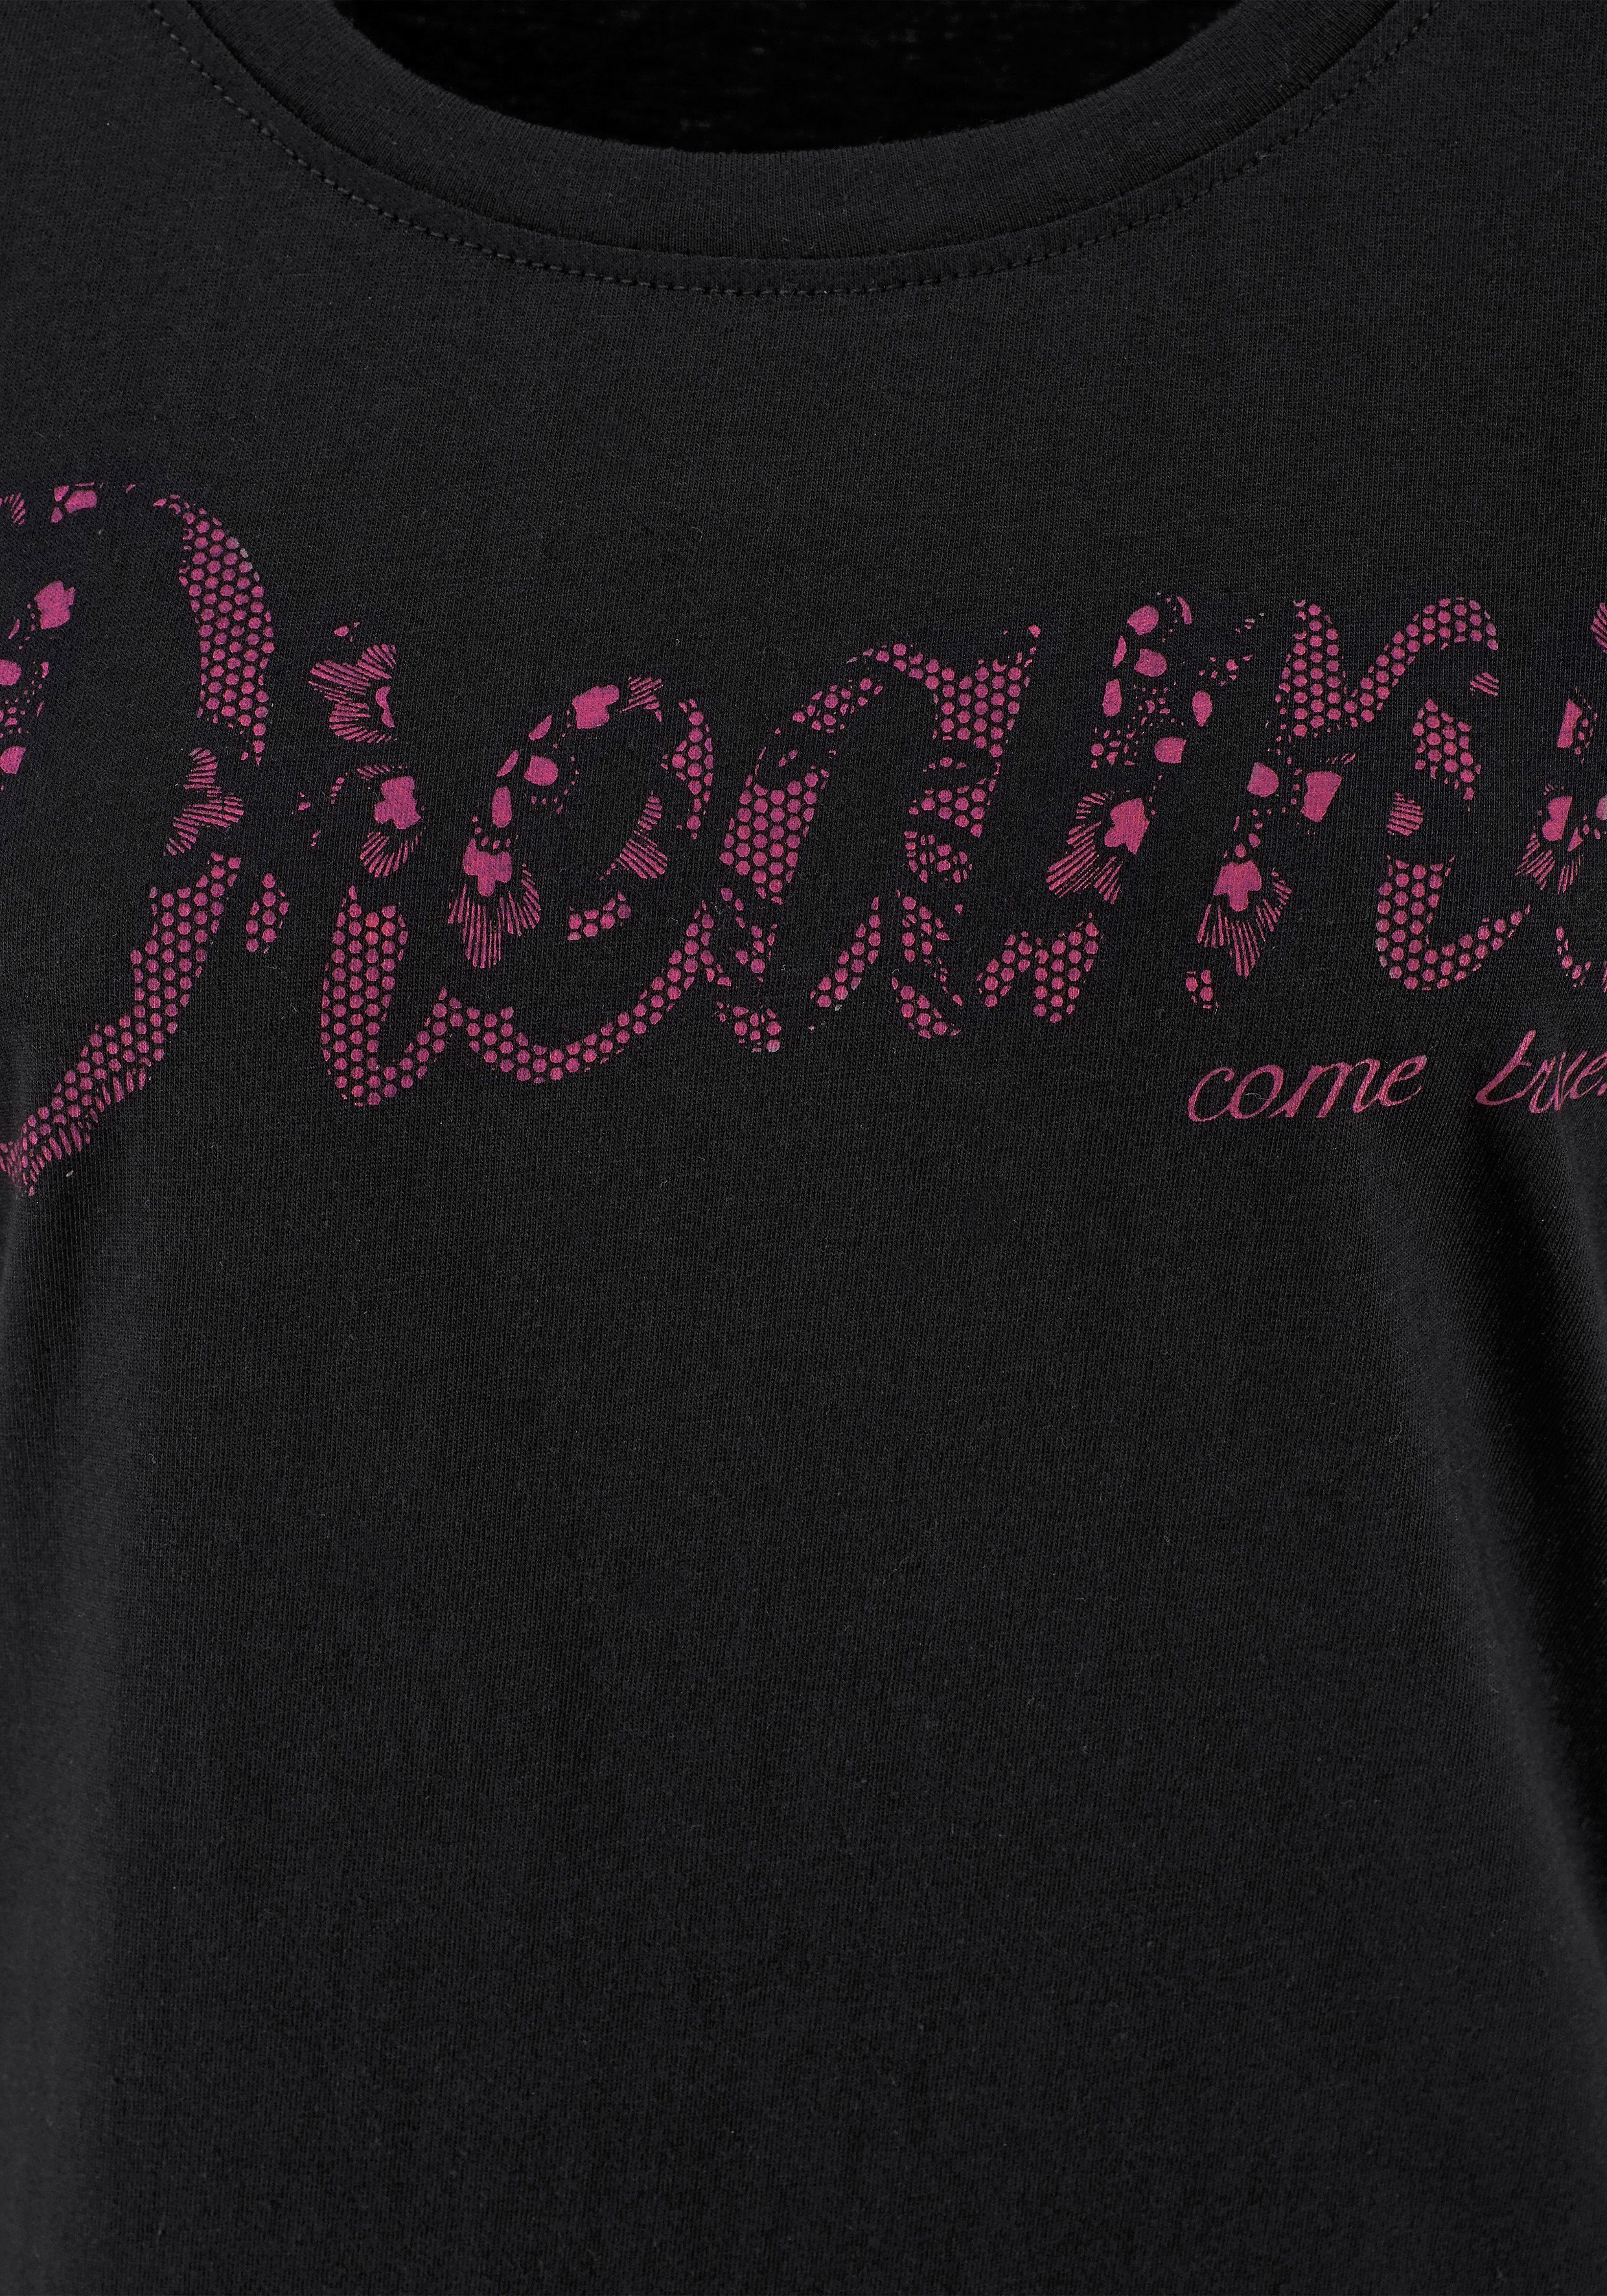 Dreams Spitzenoptik in mit pink, schwarz Sleepshirt Print (2er-Pack) Vivance